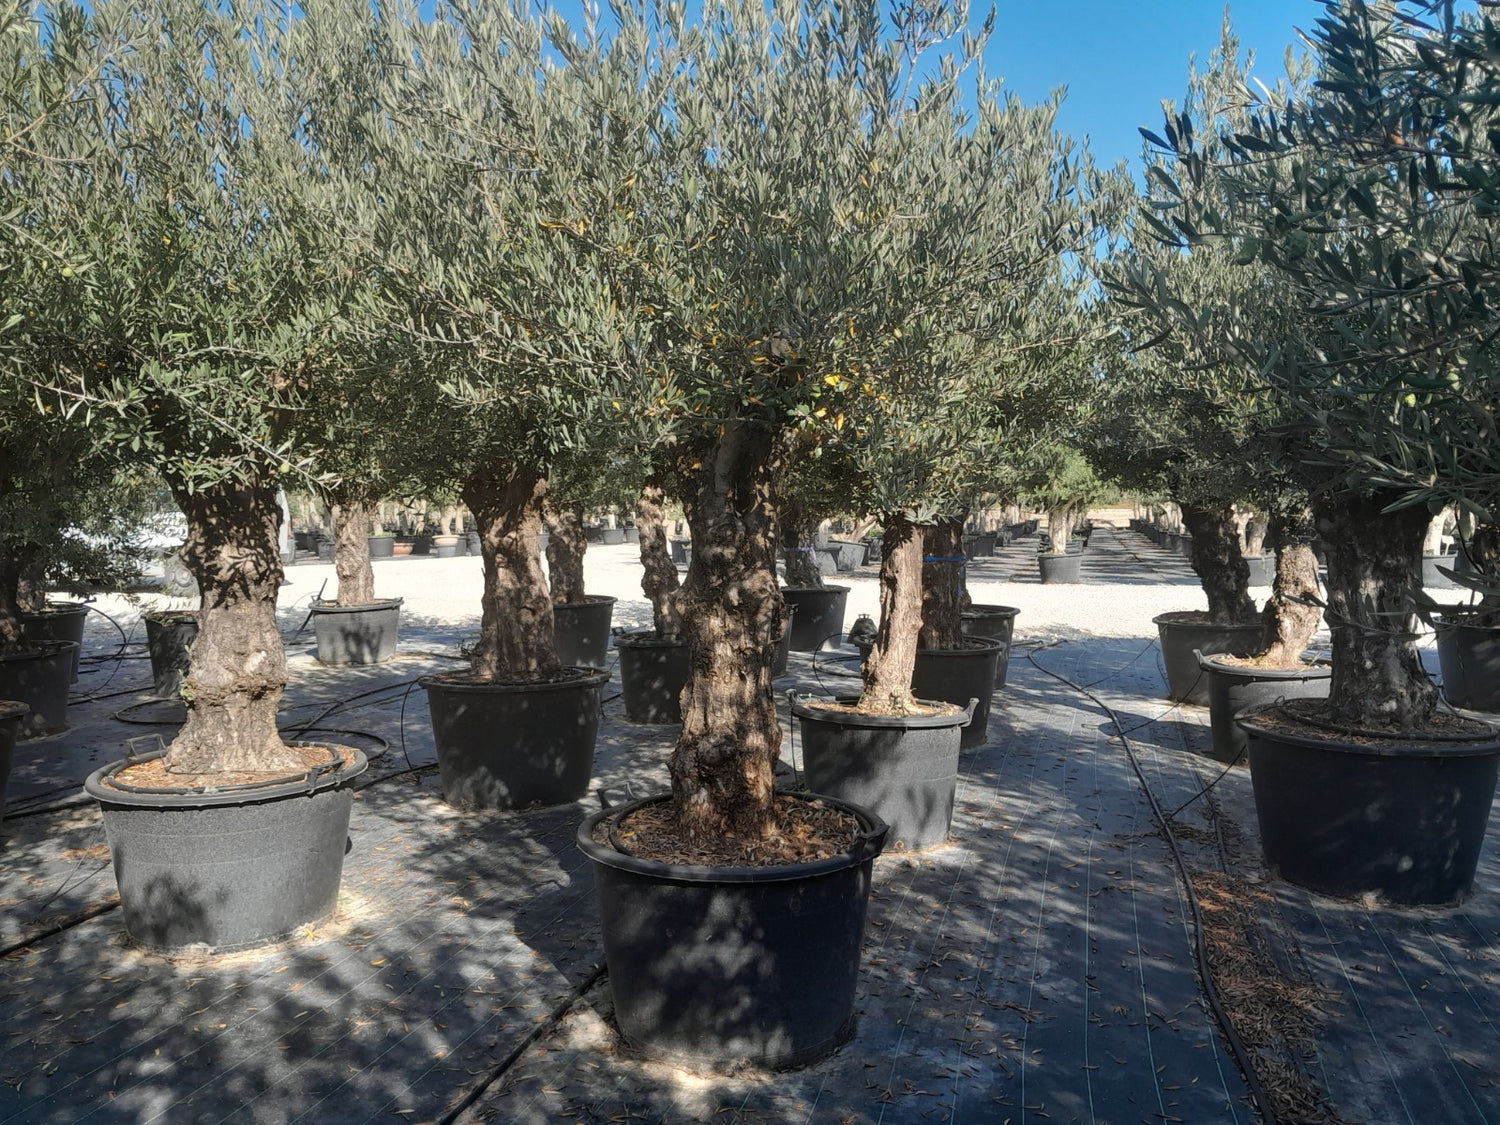 Olivenbaum Bonsai 150 Jahre Alt Winterhart bis -18 Höhe ca. 250 cm Olea Europaea TOP ANGEBOT!!!